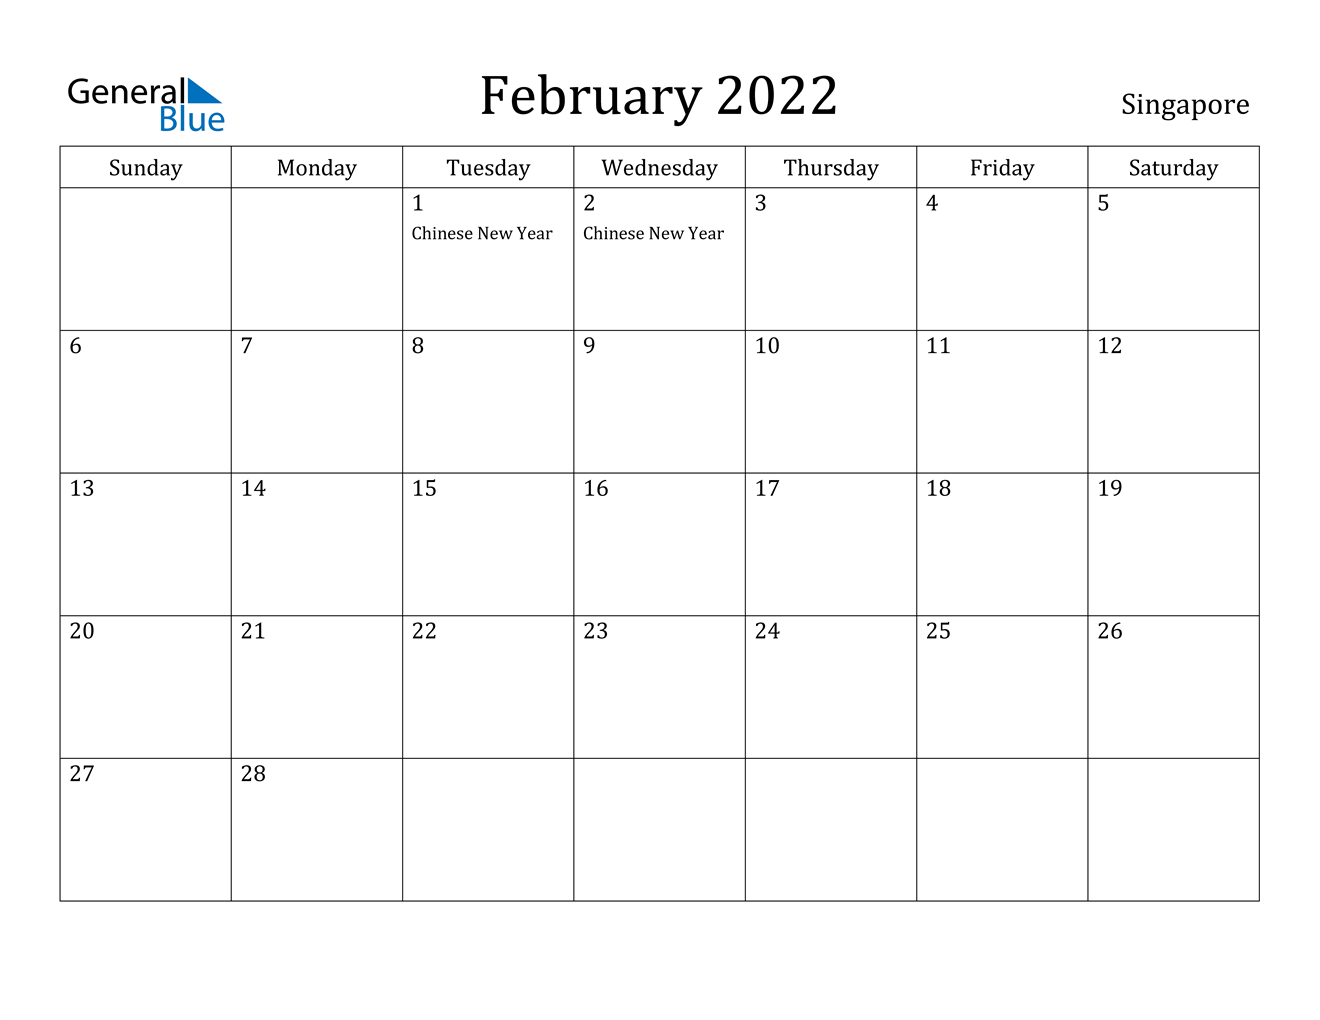 Pick February Days 2022 Calendar